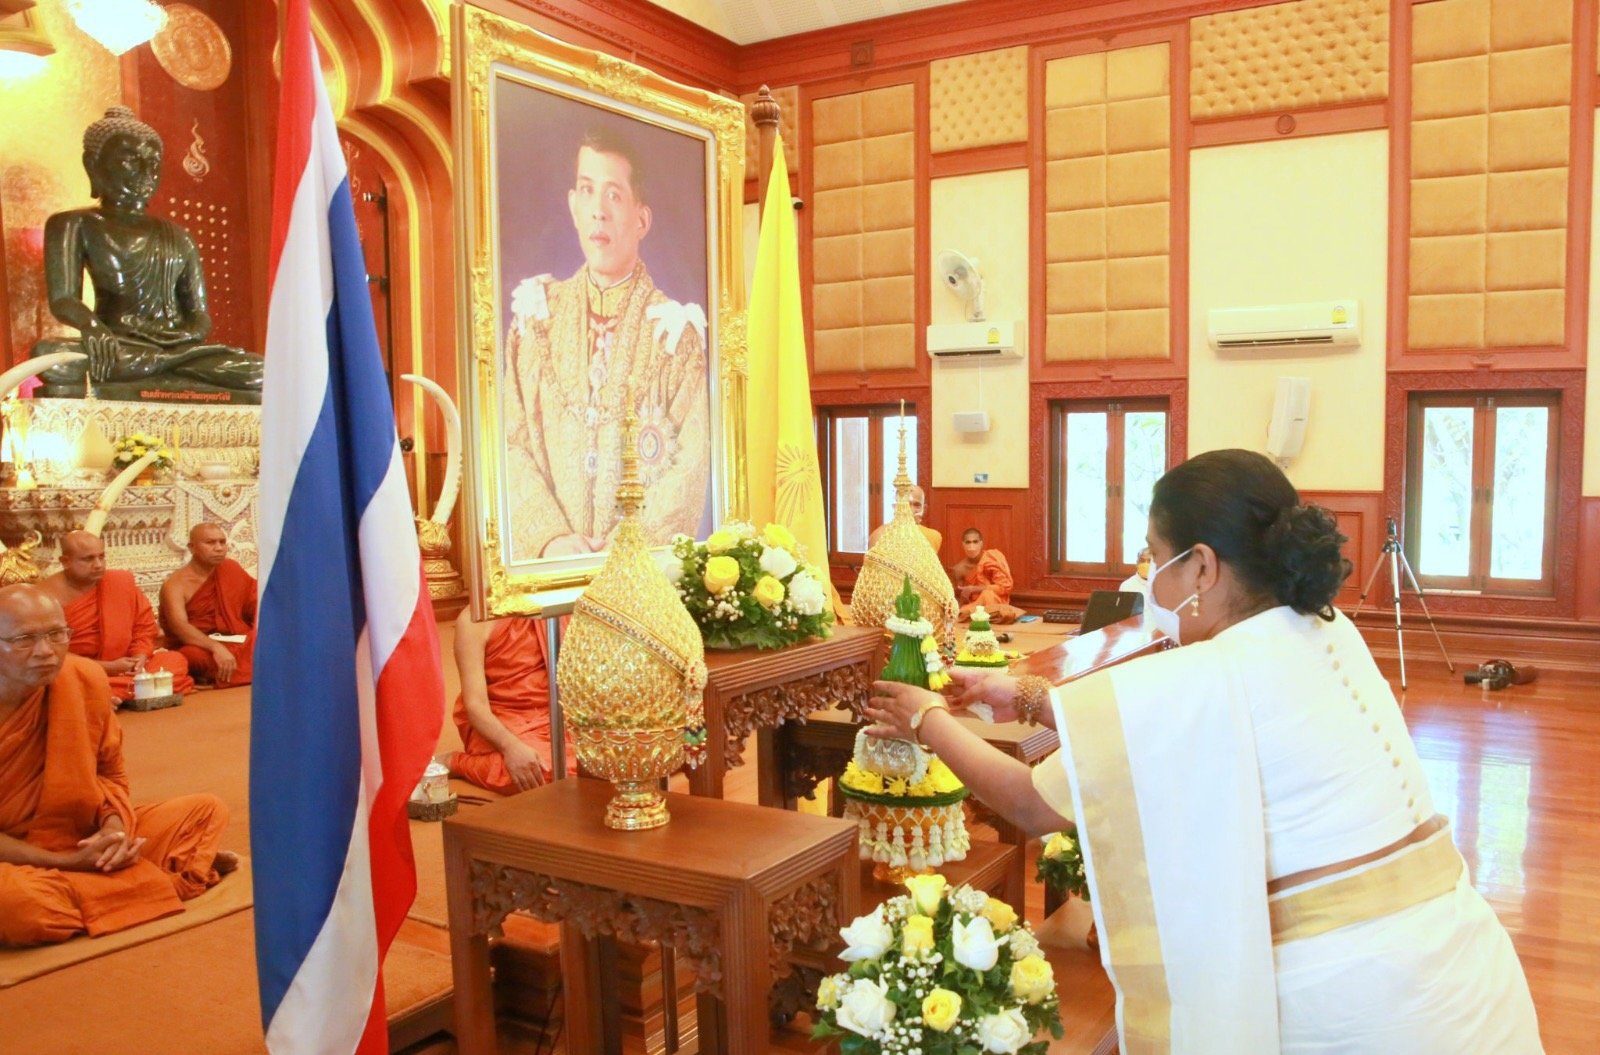 Sri Lanka novice ordination Ceremony to honour and offer Royal merit to His Majesty the King Bhumibol Adulyadej Phra Vajra Klao Chao Yu Hua of the Kingdom of Thailand